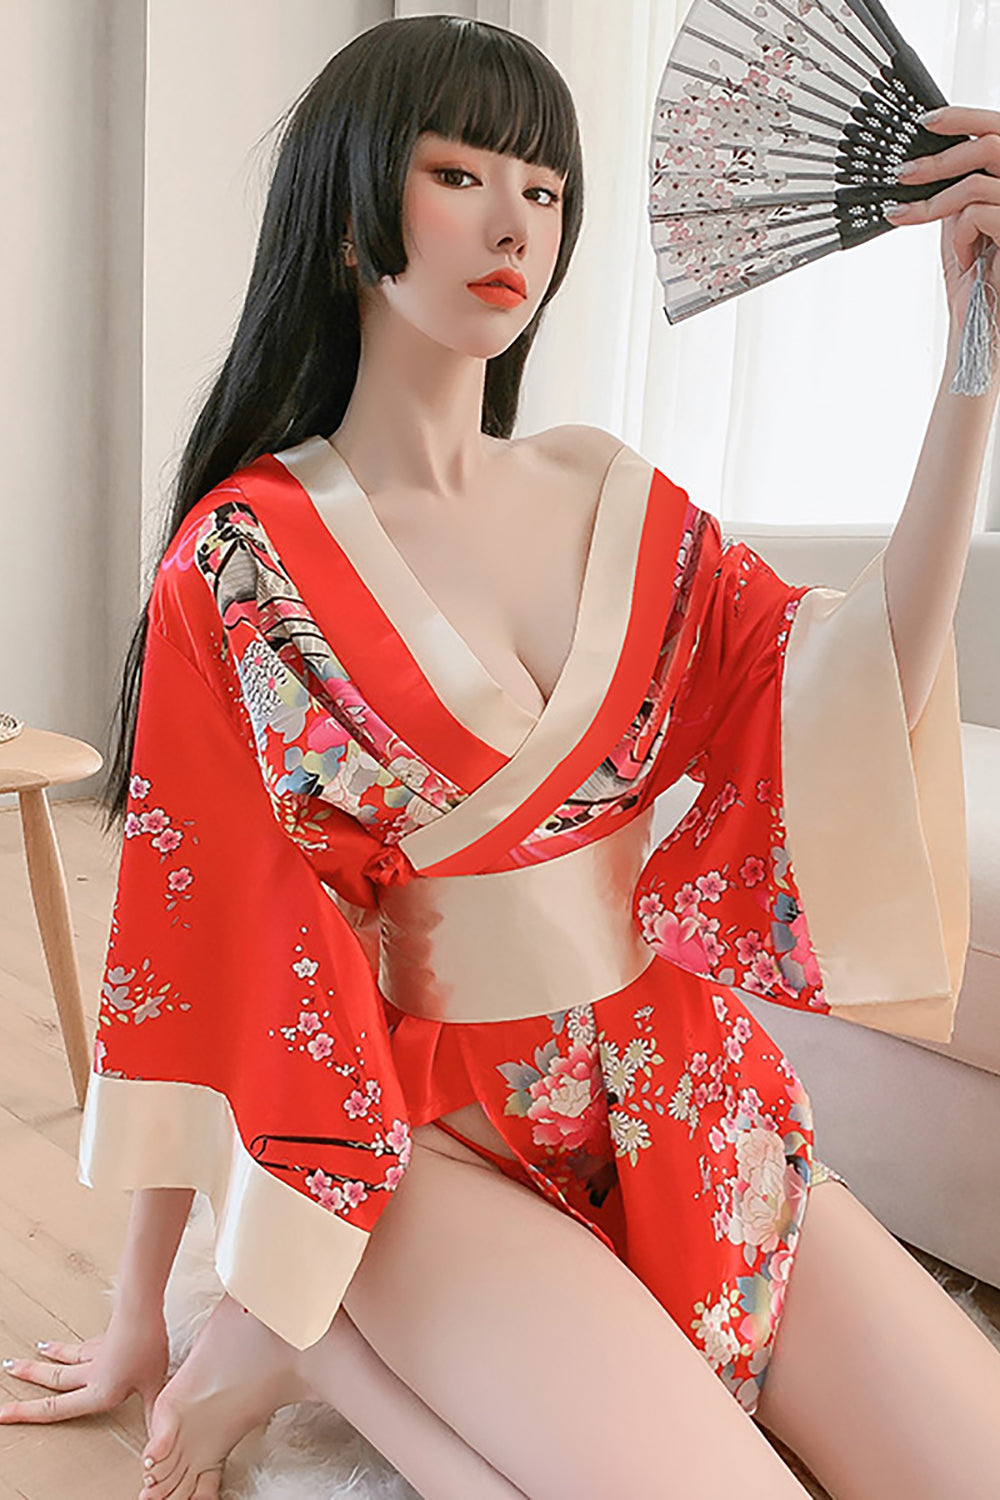 Kimono Japanese Sexy Lingerie 7972